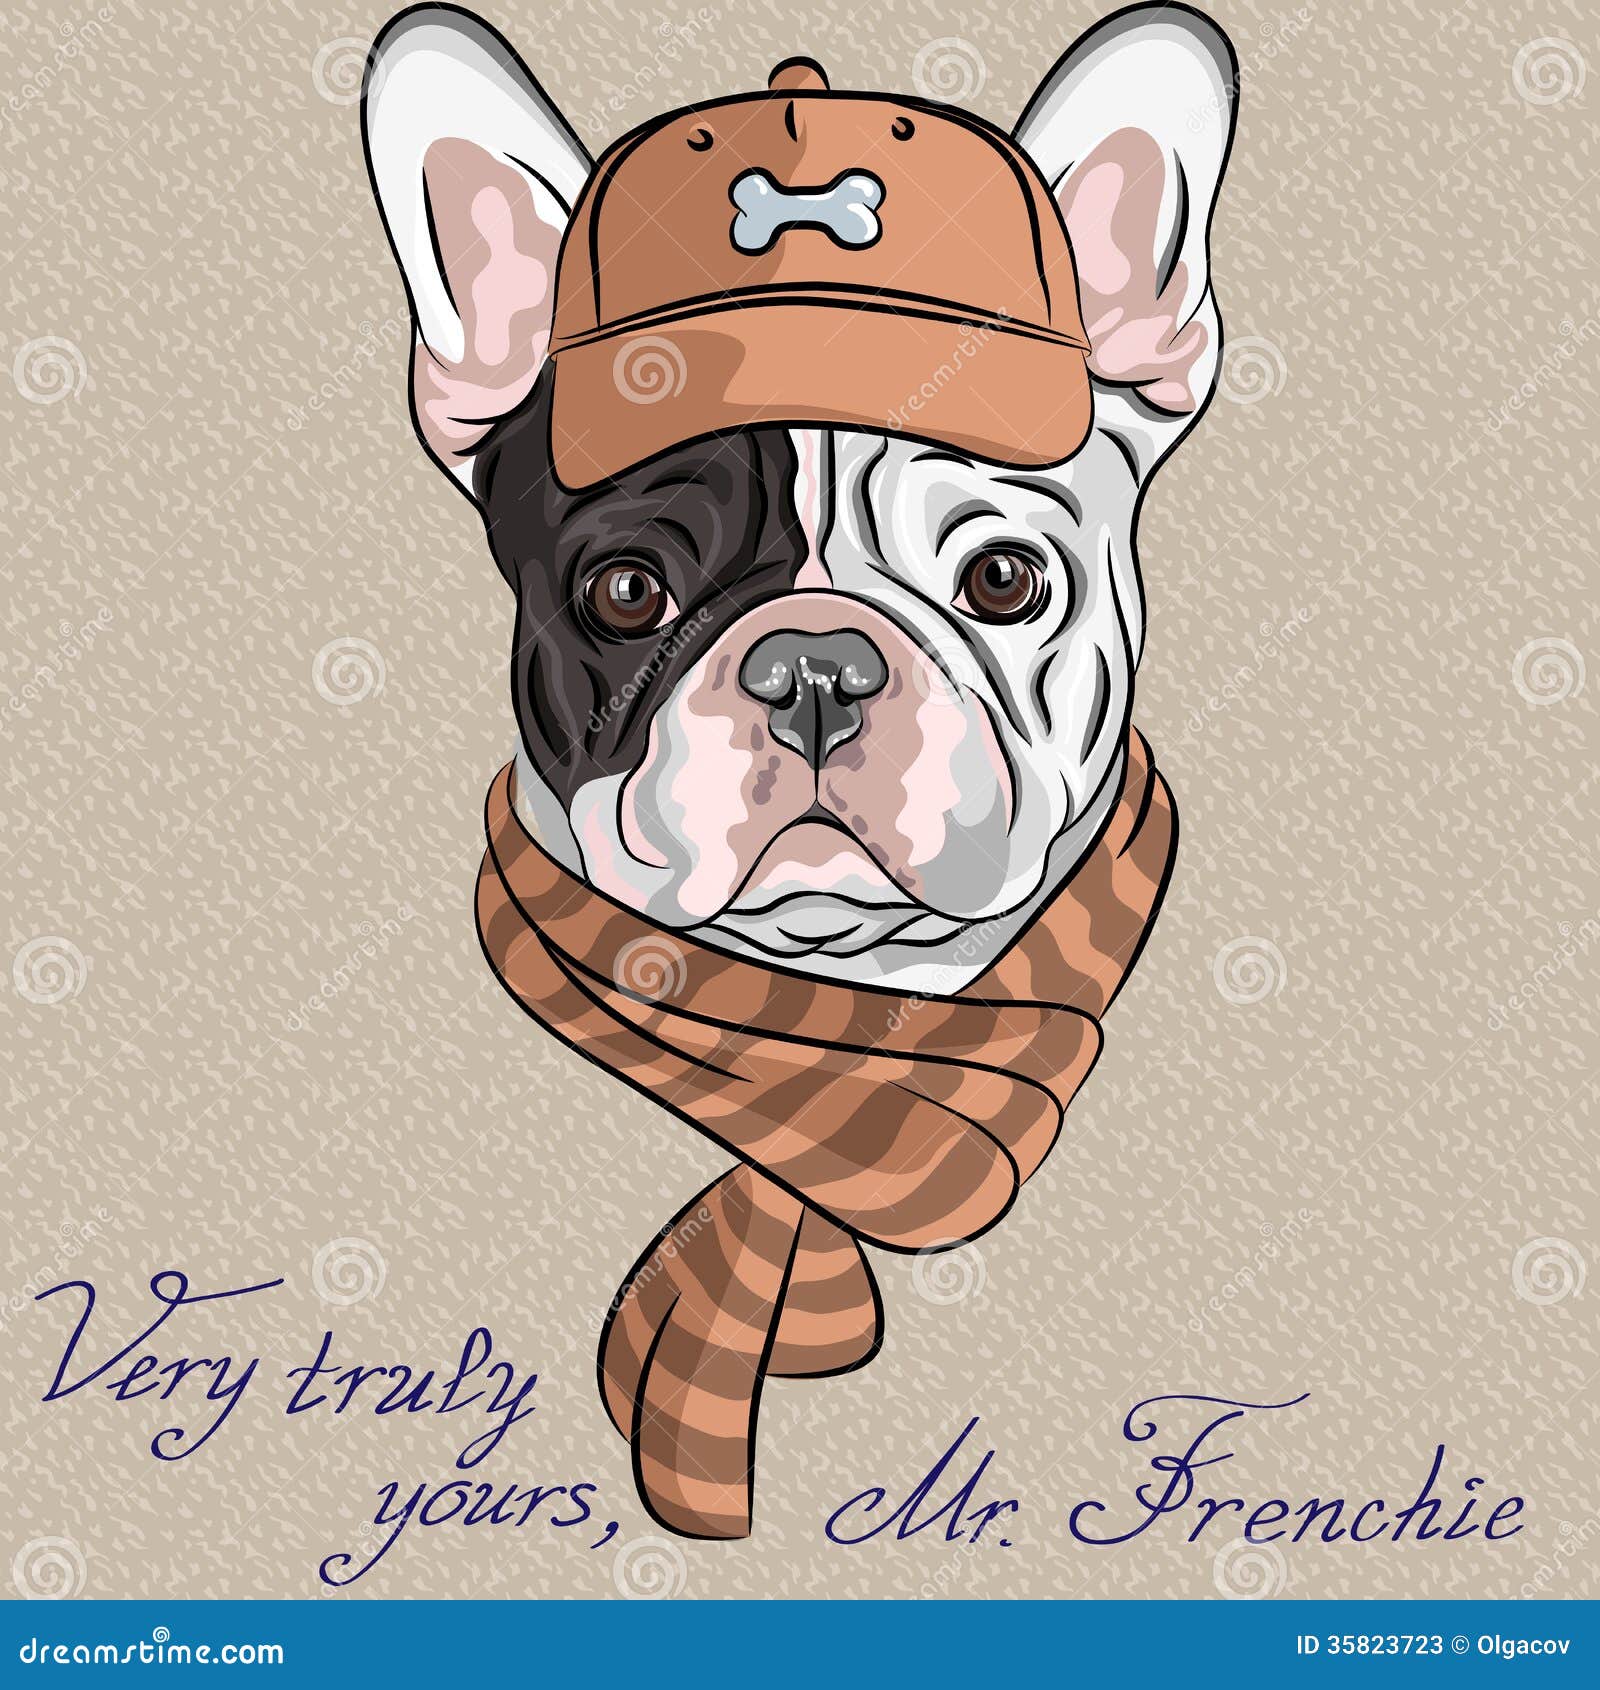 bulldog vector illustrations cartoon french dog funny hipster cartoons